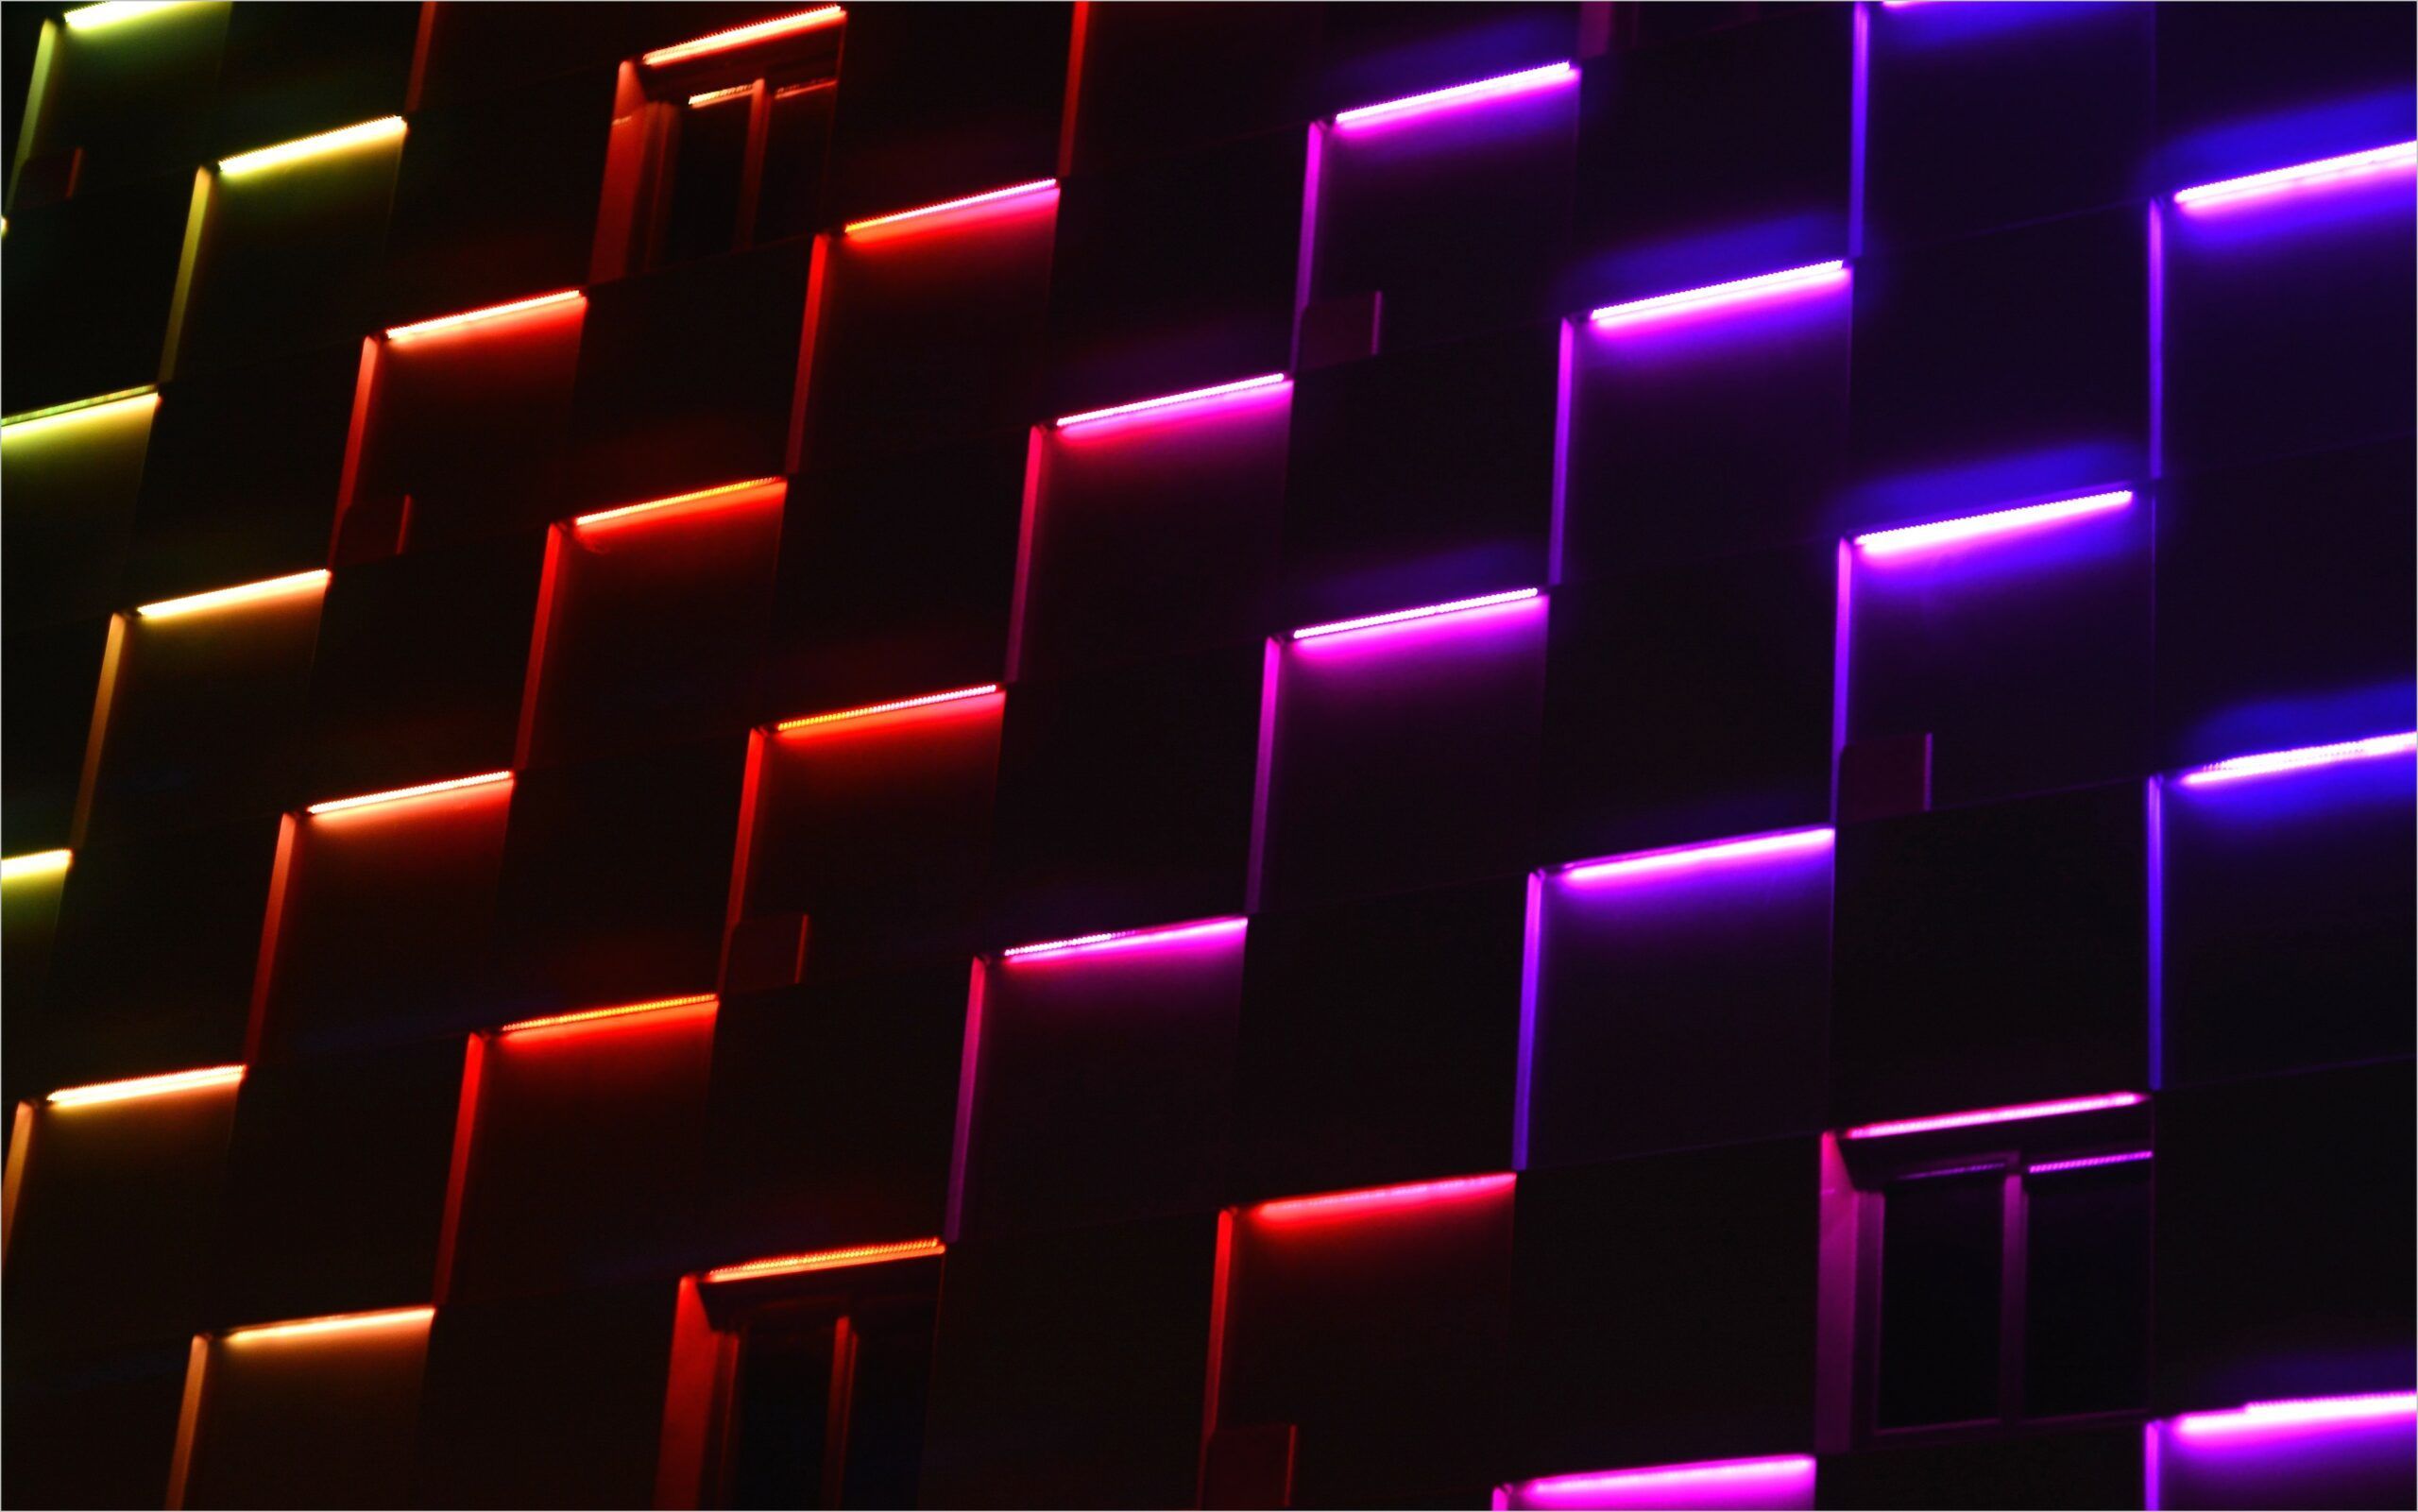 4k Wallpaper Neon Lights. Neon wallpaper, Colorful wallpaper, Abstract